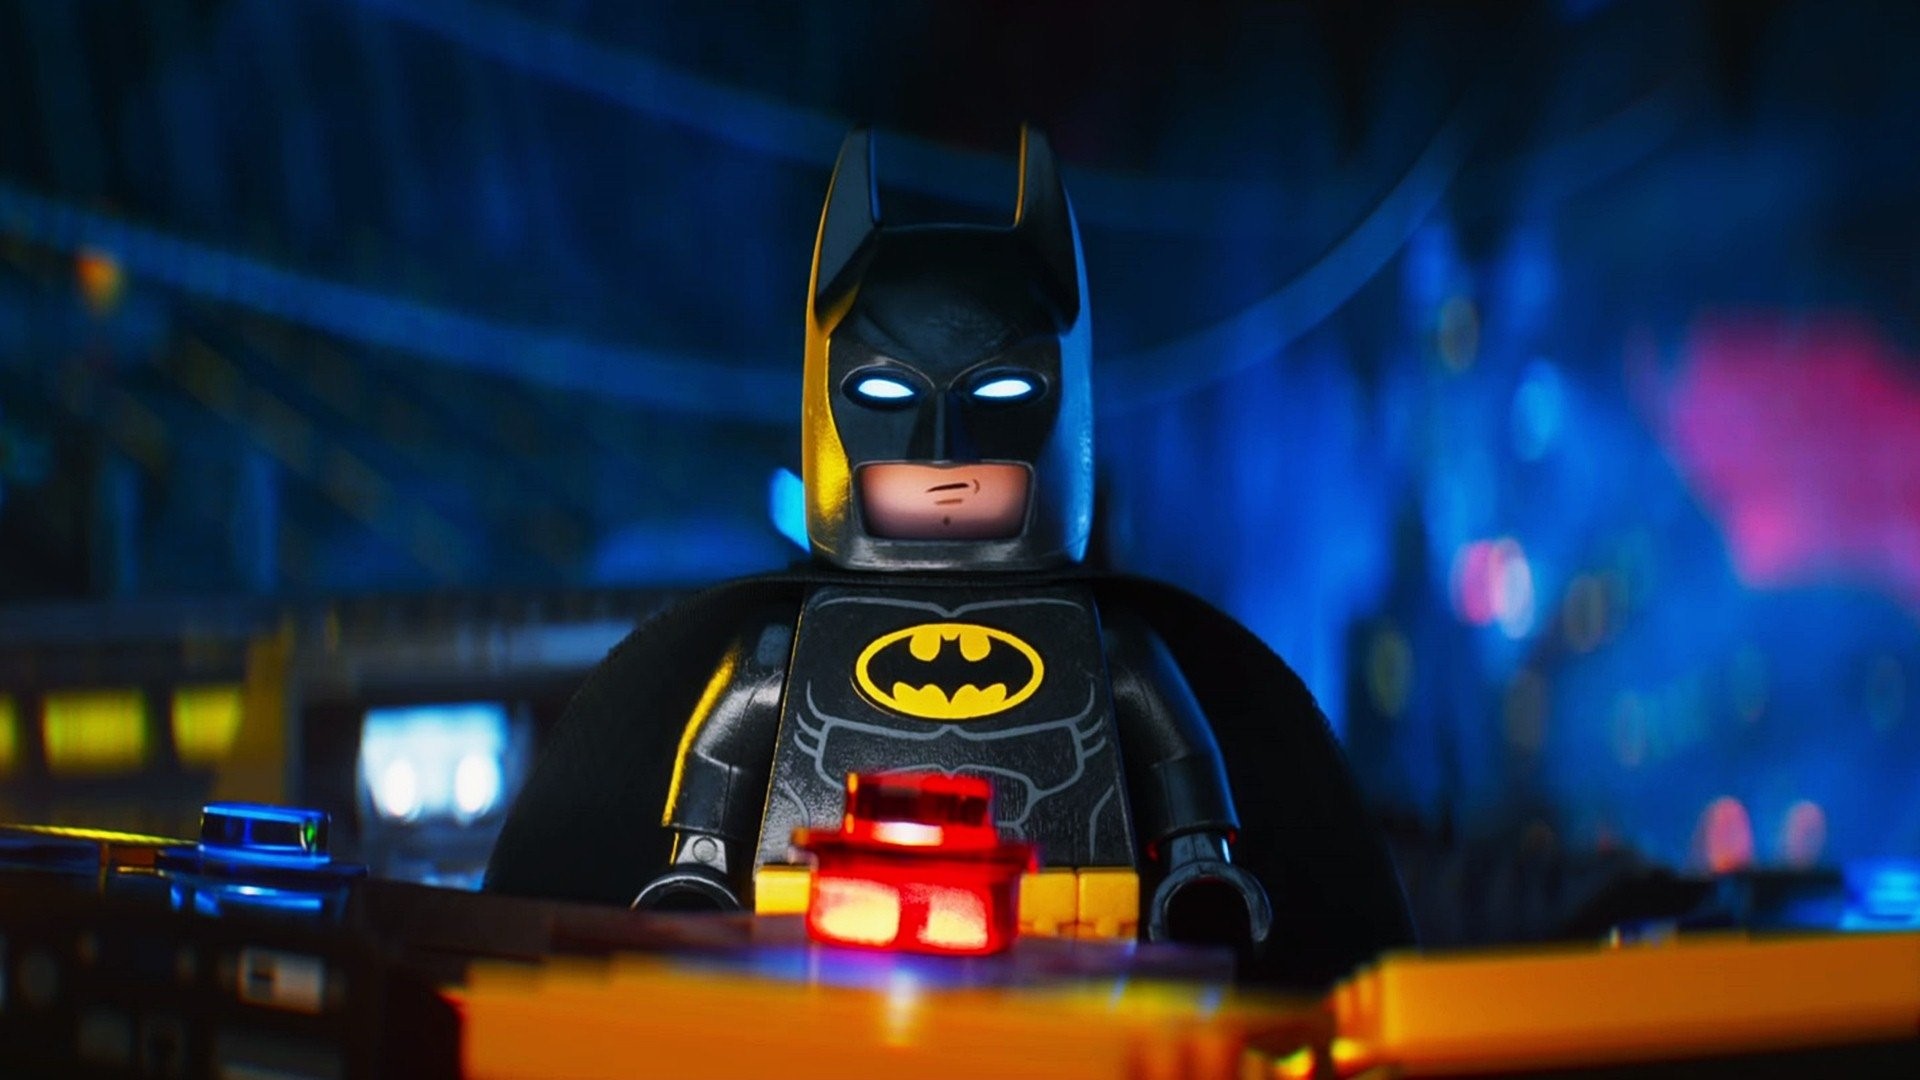 1920x1080 Film - The Lego Batman Movie Lego Batman Bakgrund